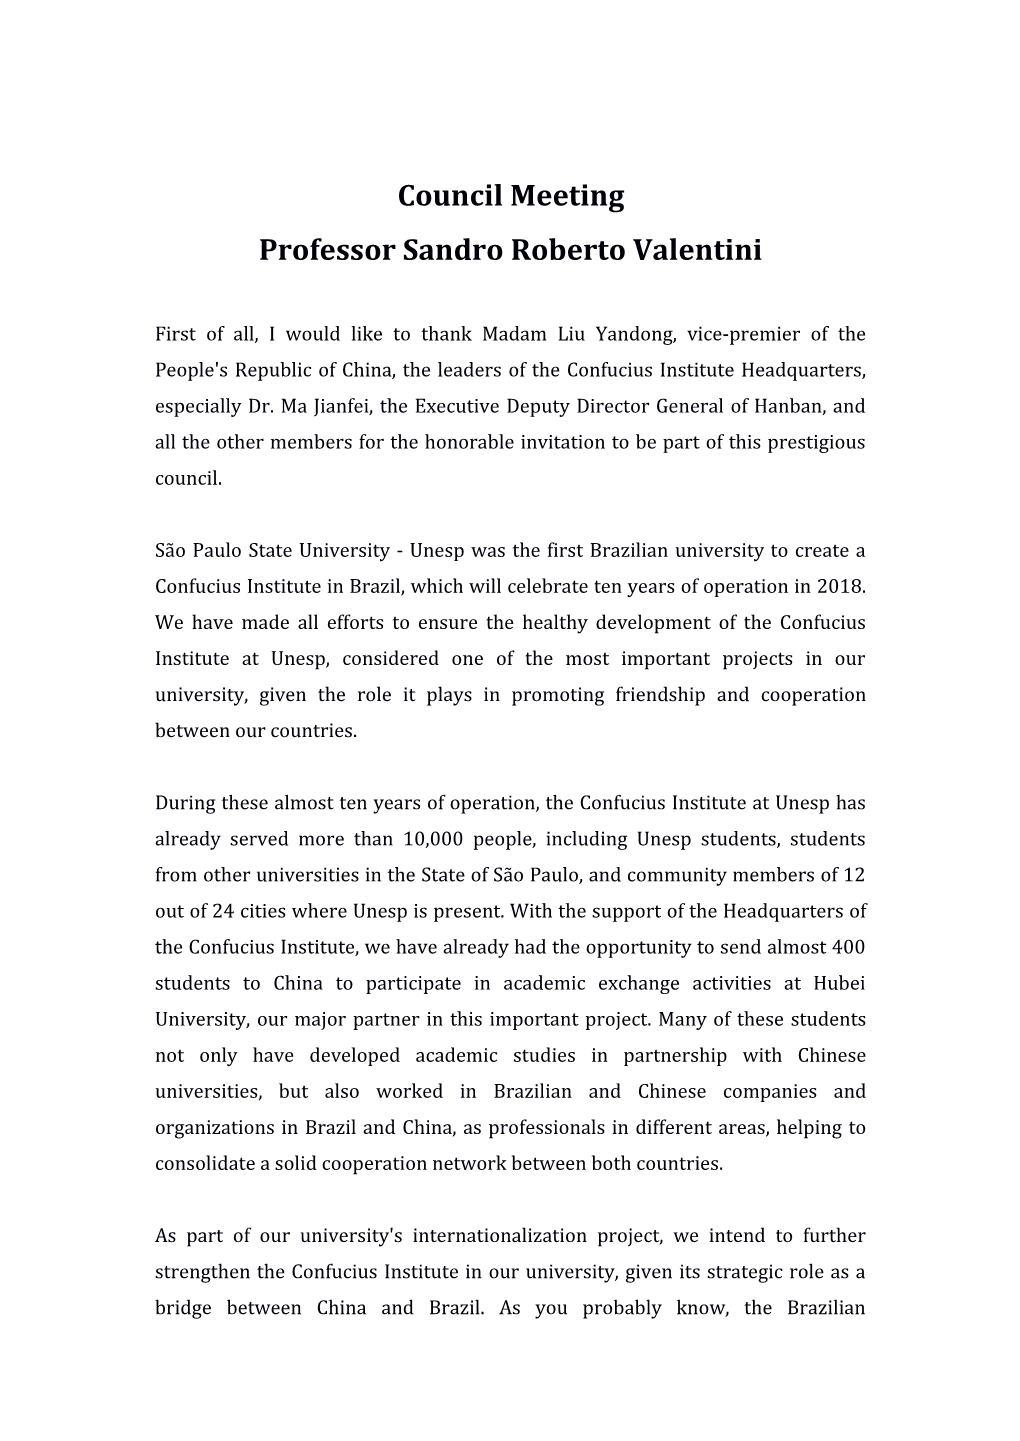 Professor Sandro Roberto Valentini